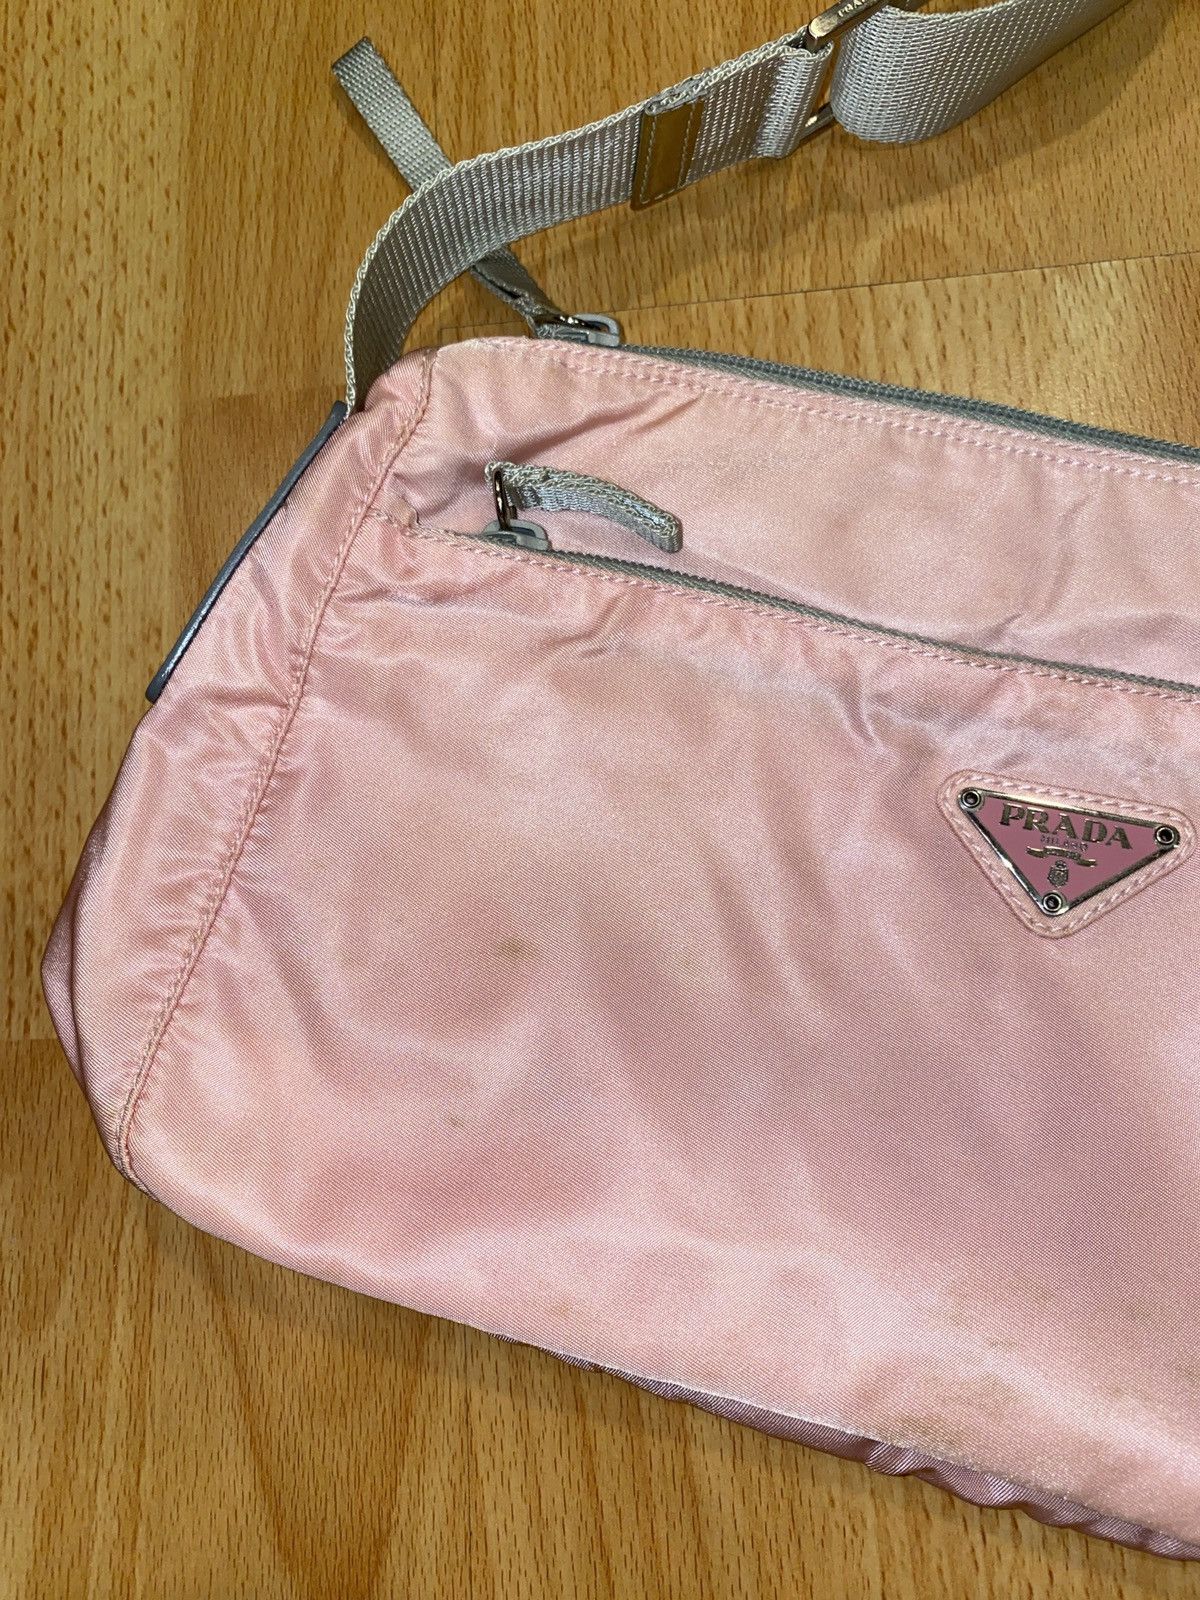 Prada Prada Nylon Shoulder Bag Size ONE SIZE - 2 Preview